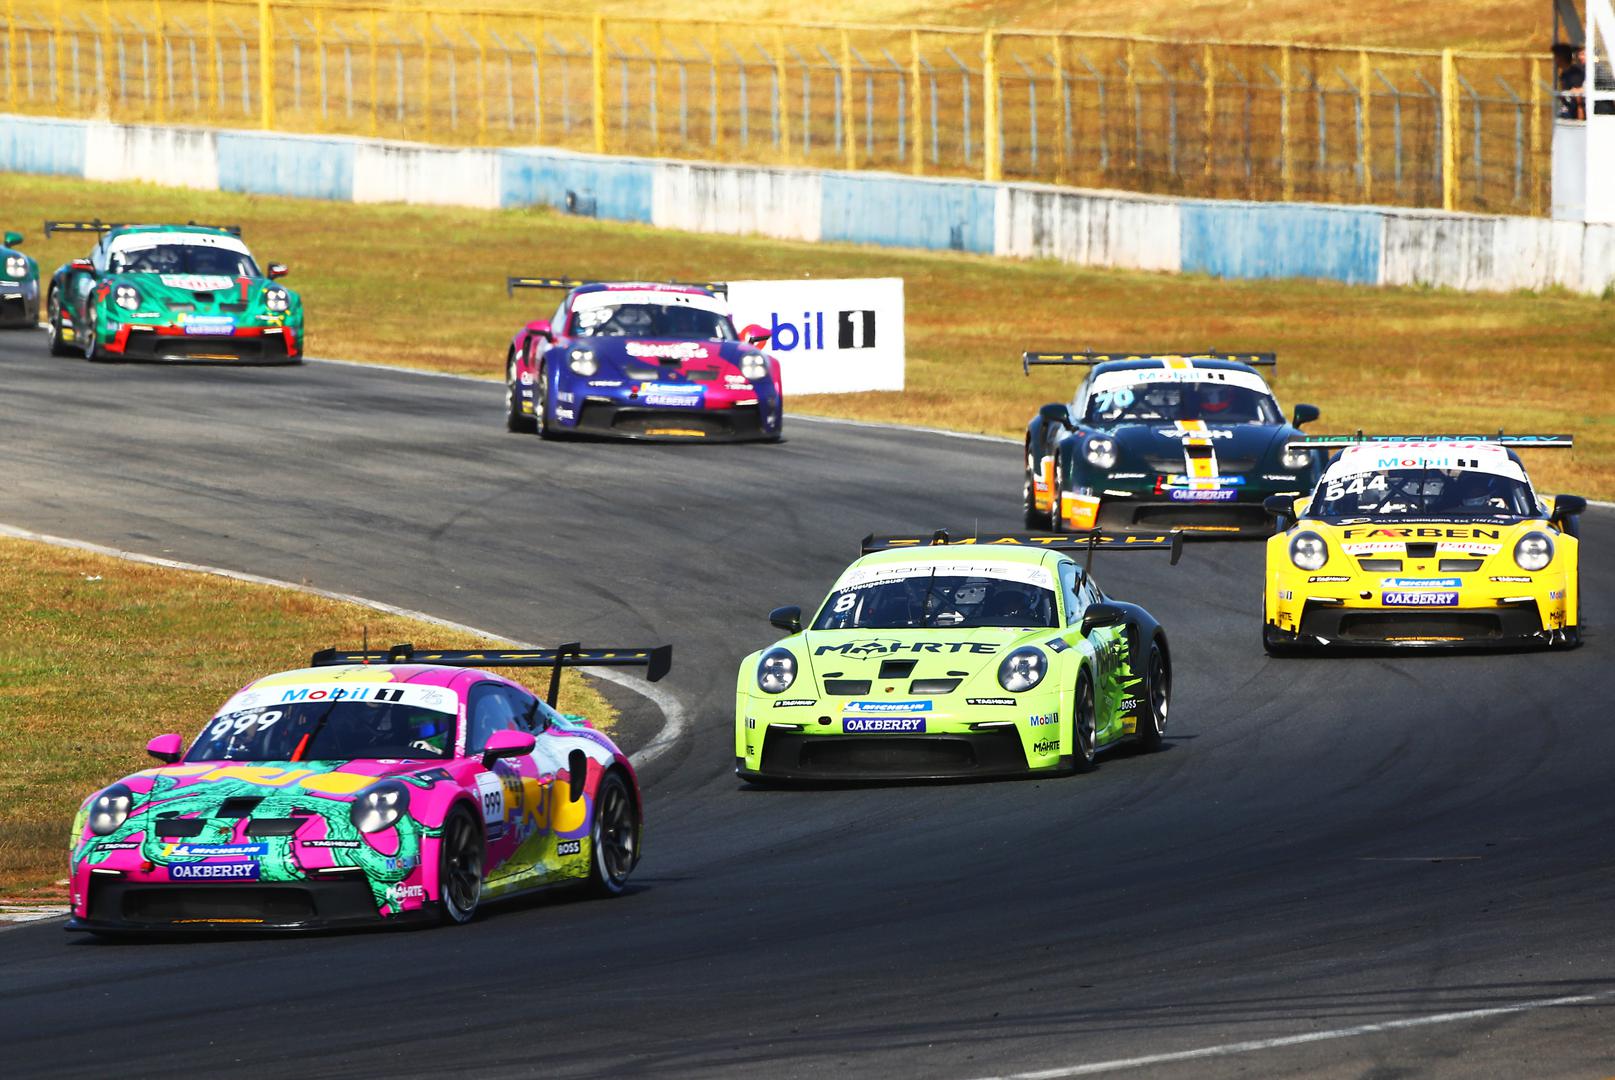 5ª Etapa da Porsche Cup em Interlagos